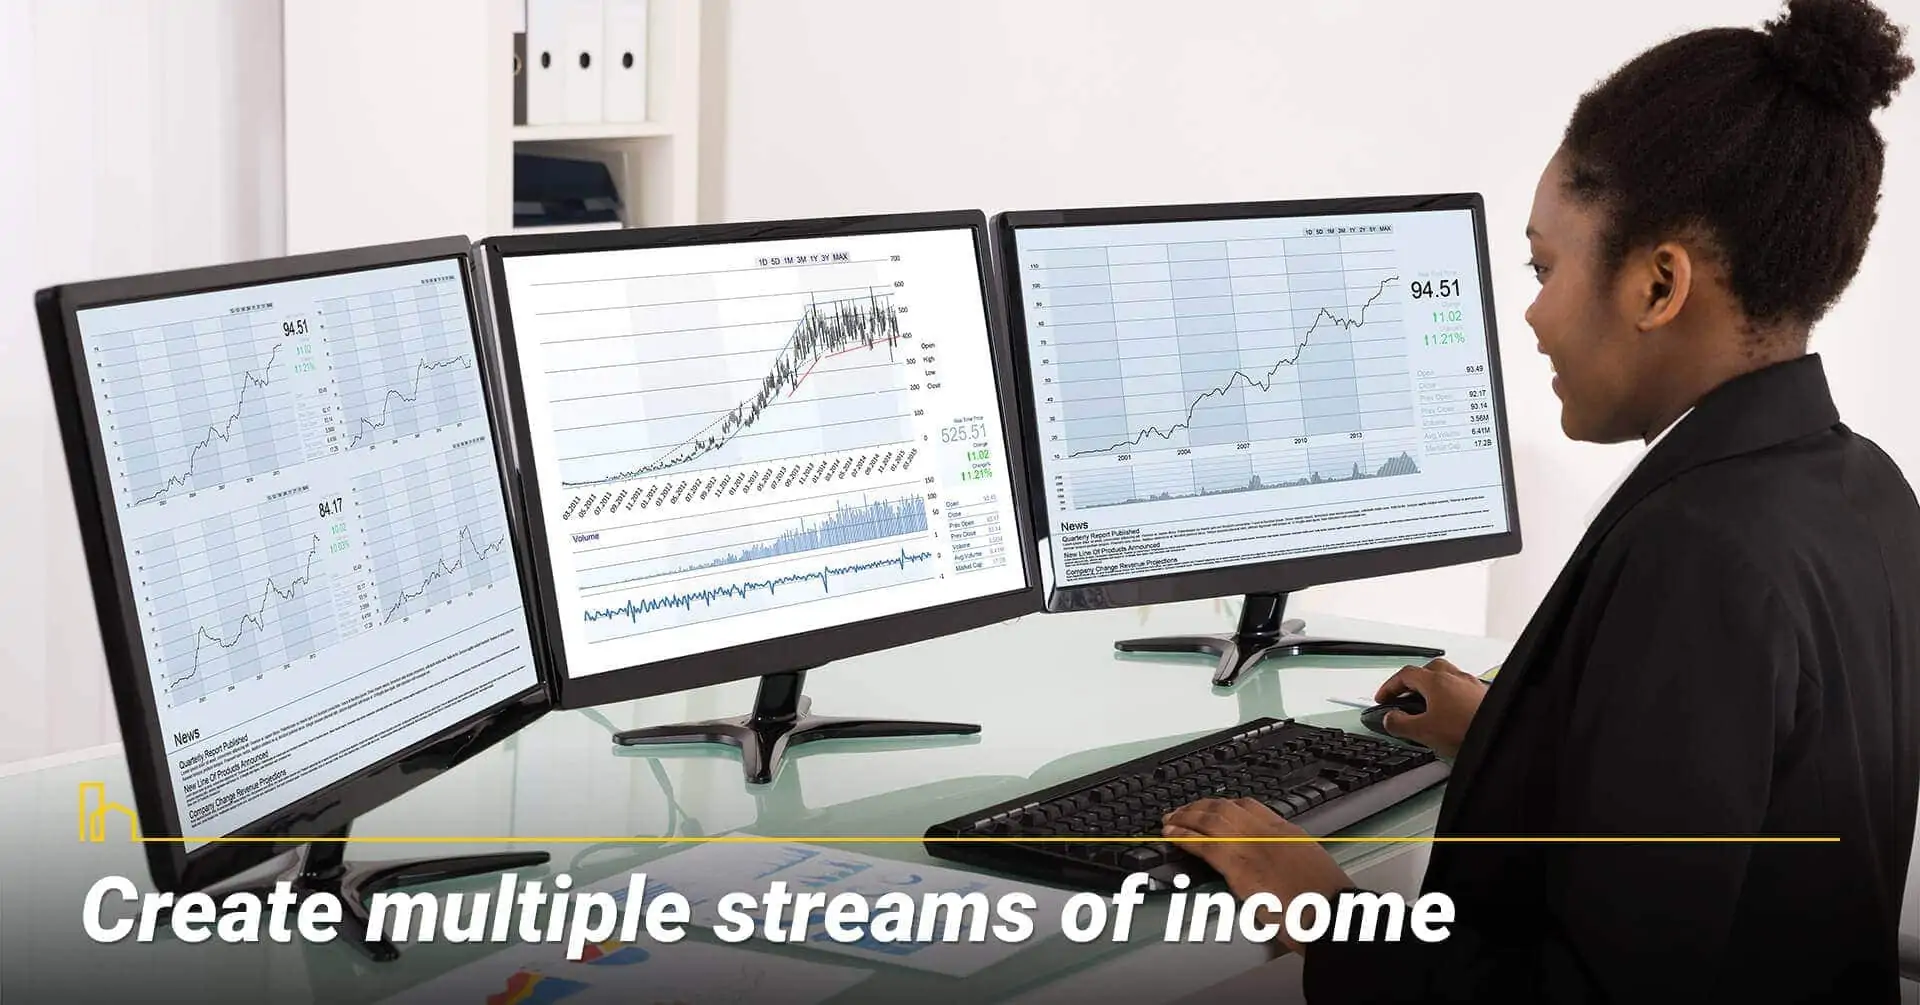 Create multiple streams of income, generate additional income streams